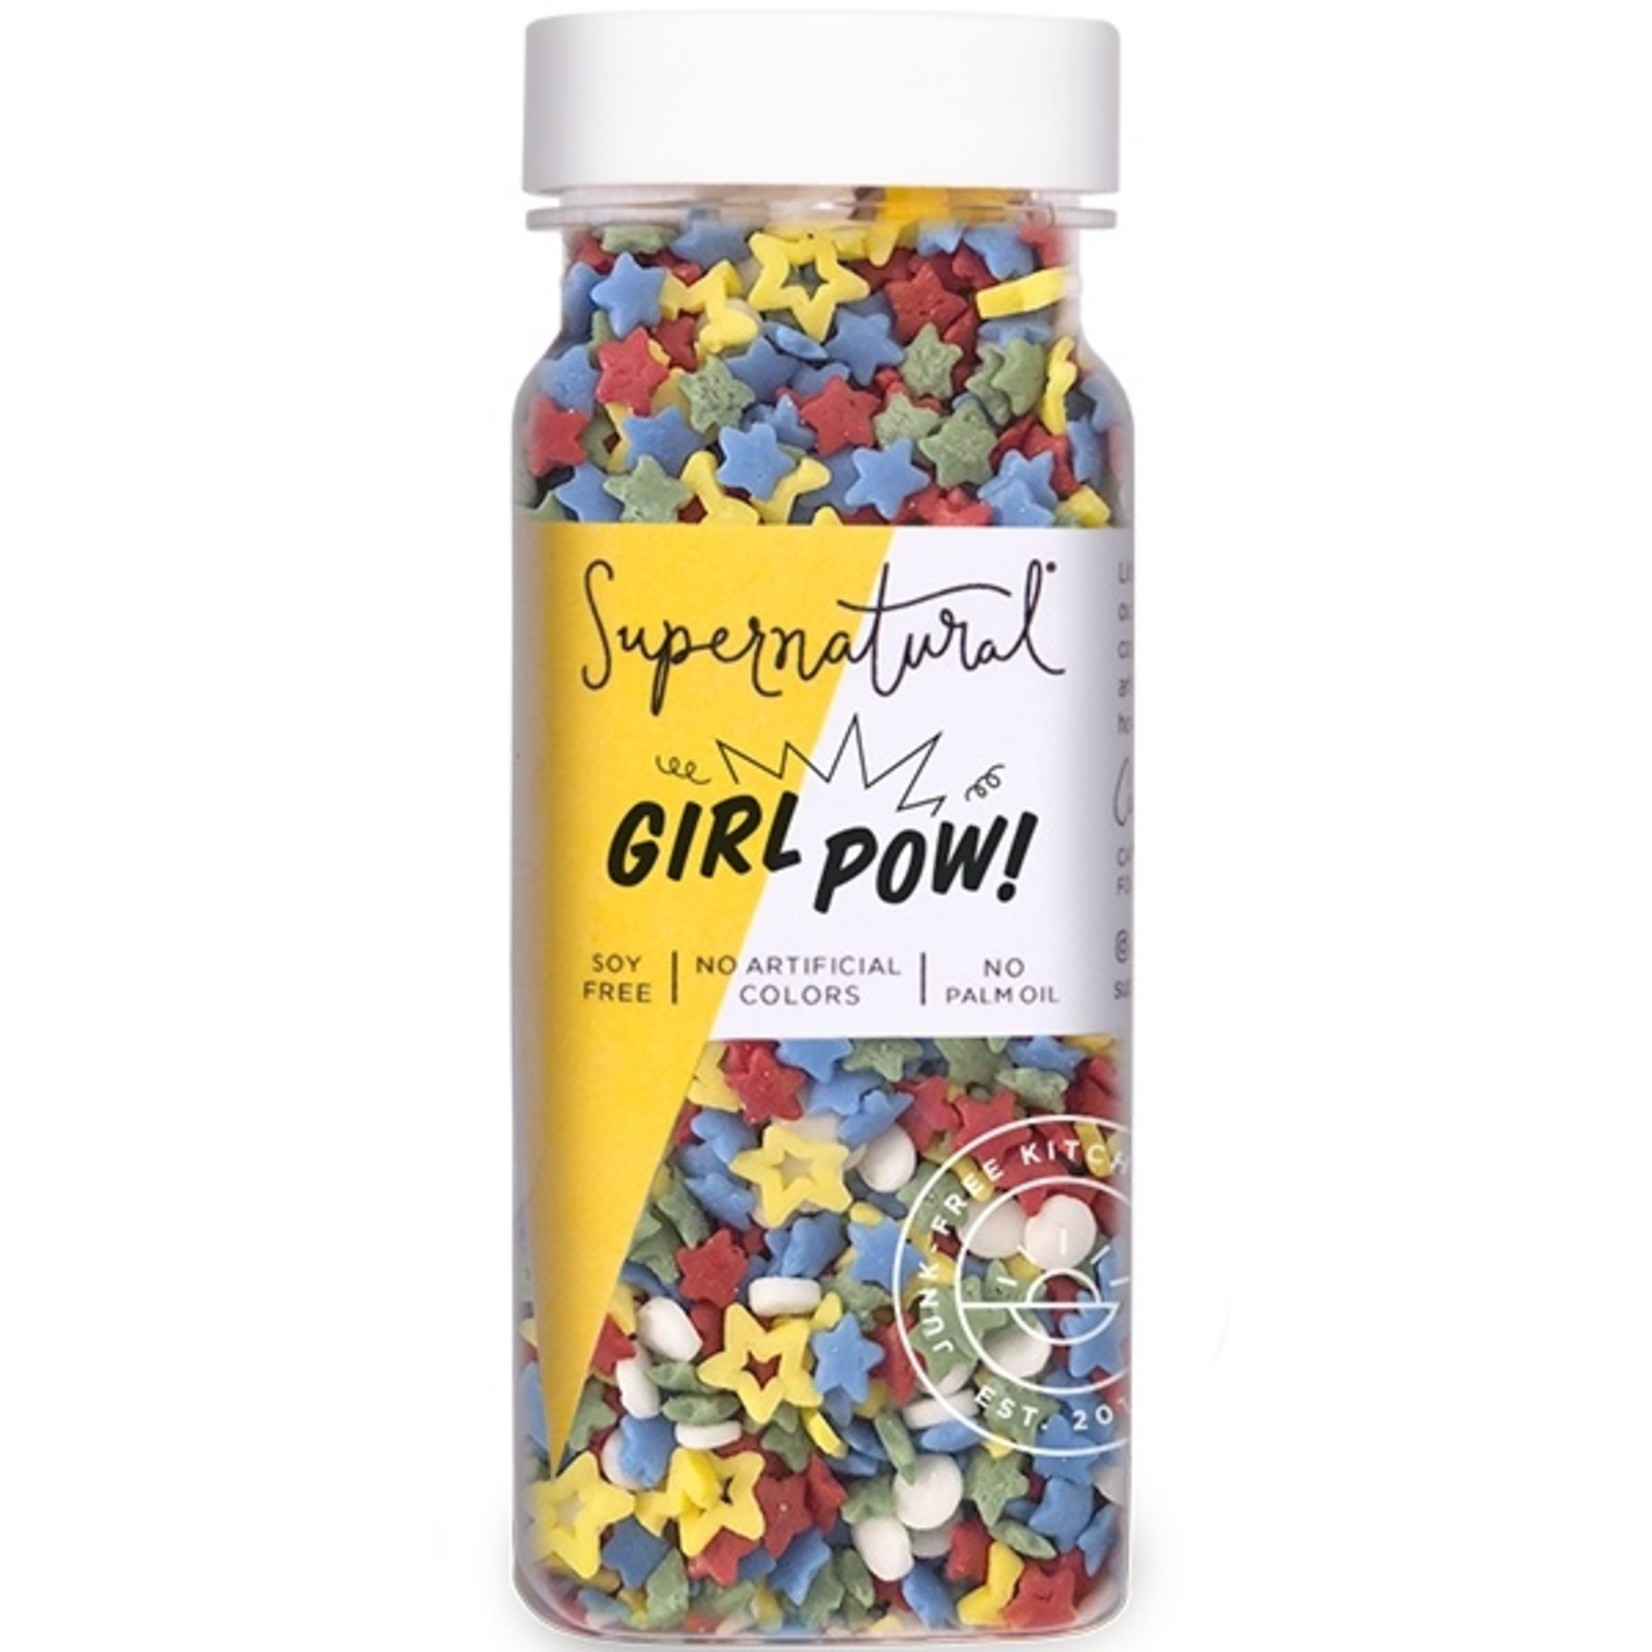 Supernatural Dye-Free Girl Pow! Sprinkles